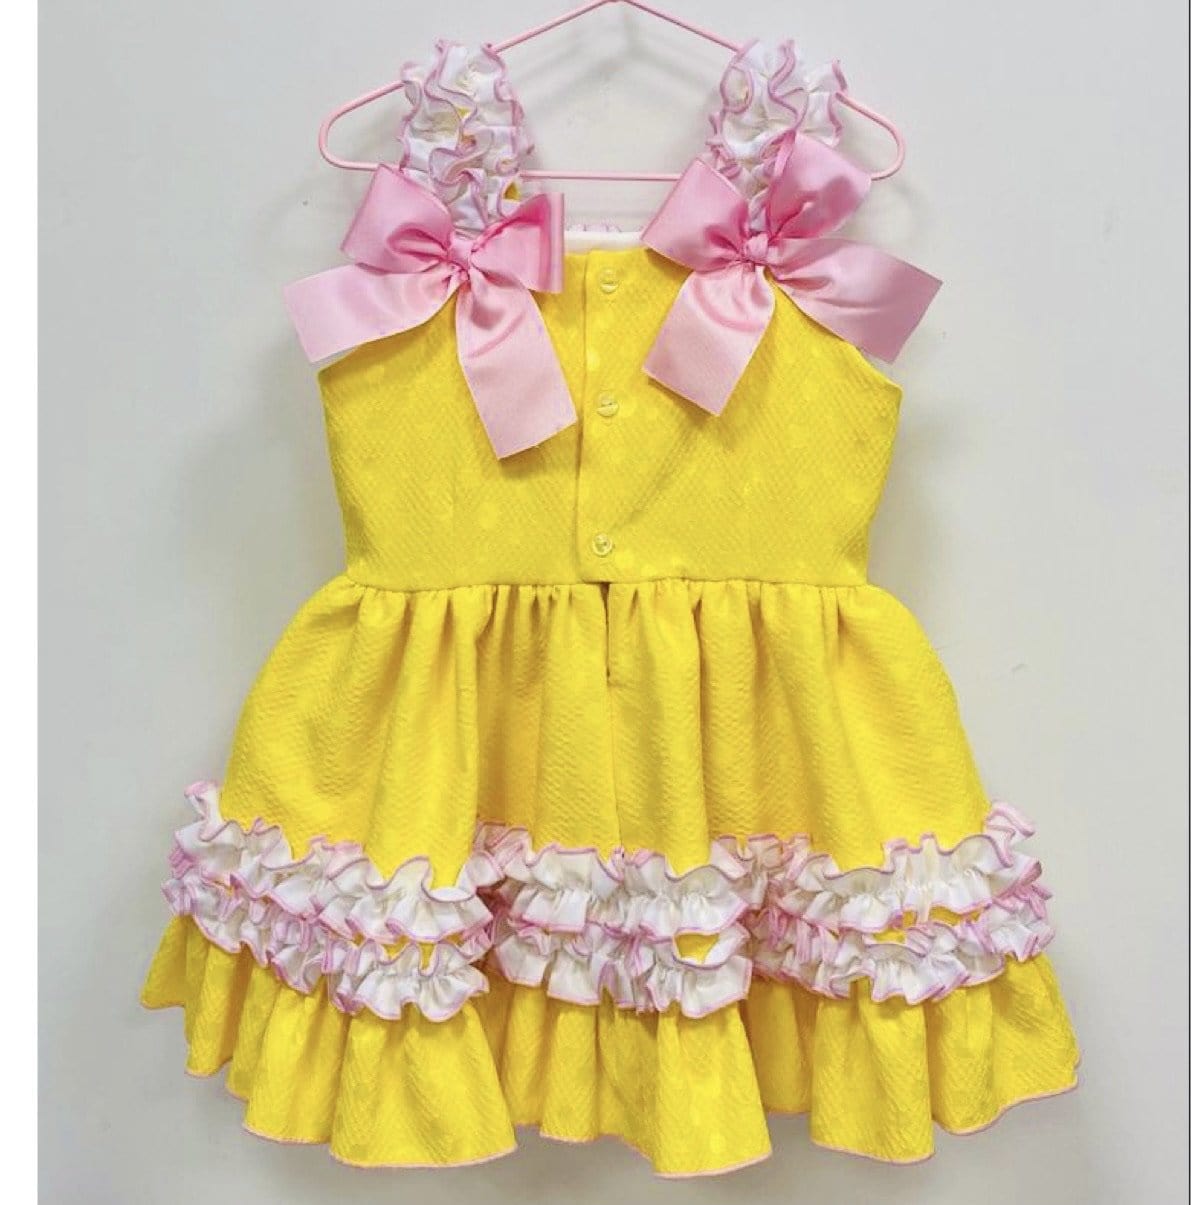 NINI - Easter Baby Dress